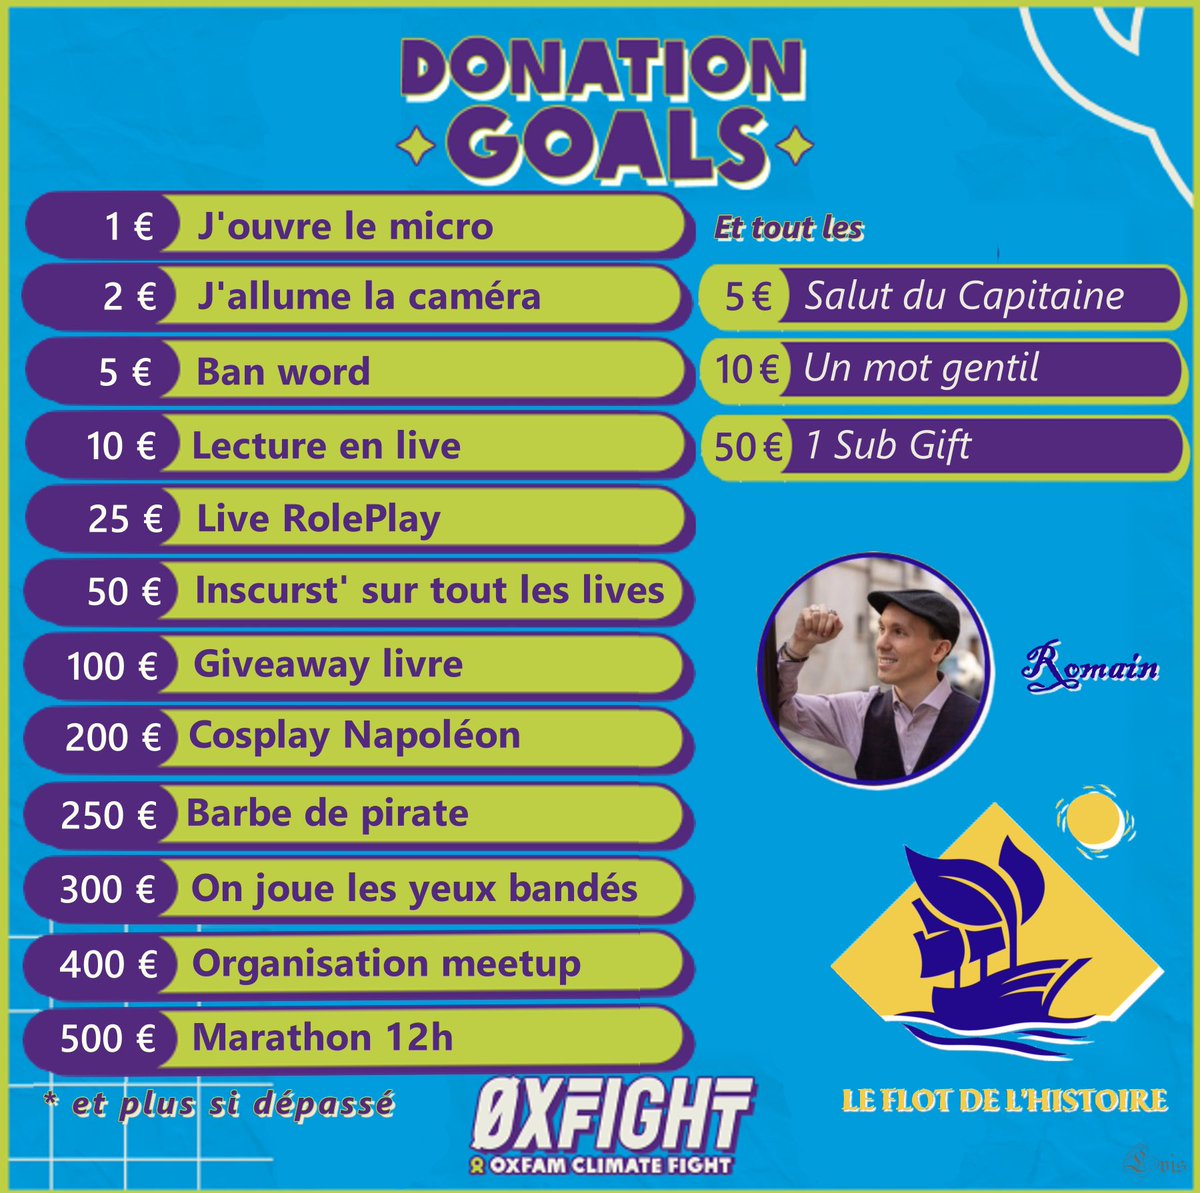 Mes donations goals pour le #oxfight d’ @oxfamfrance 🚀

#twitchfr #streamfr #donation